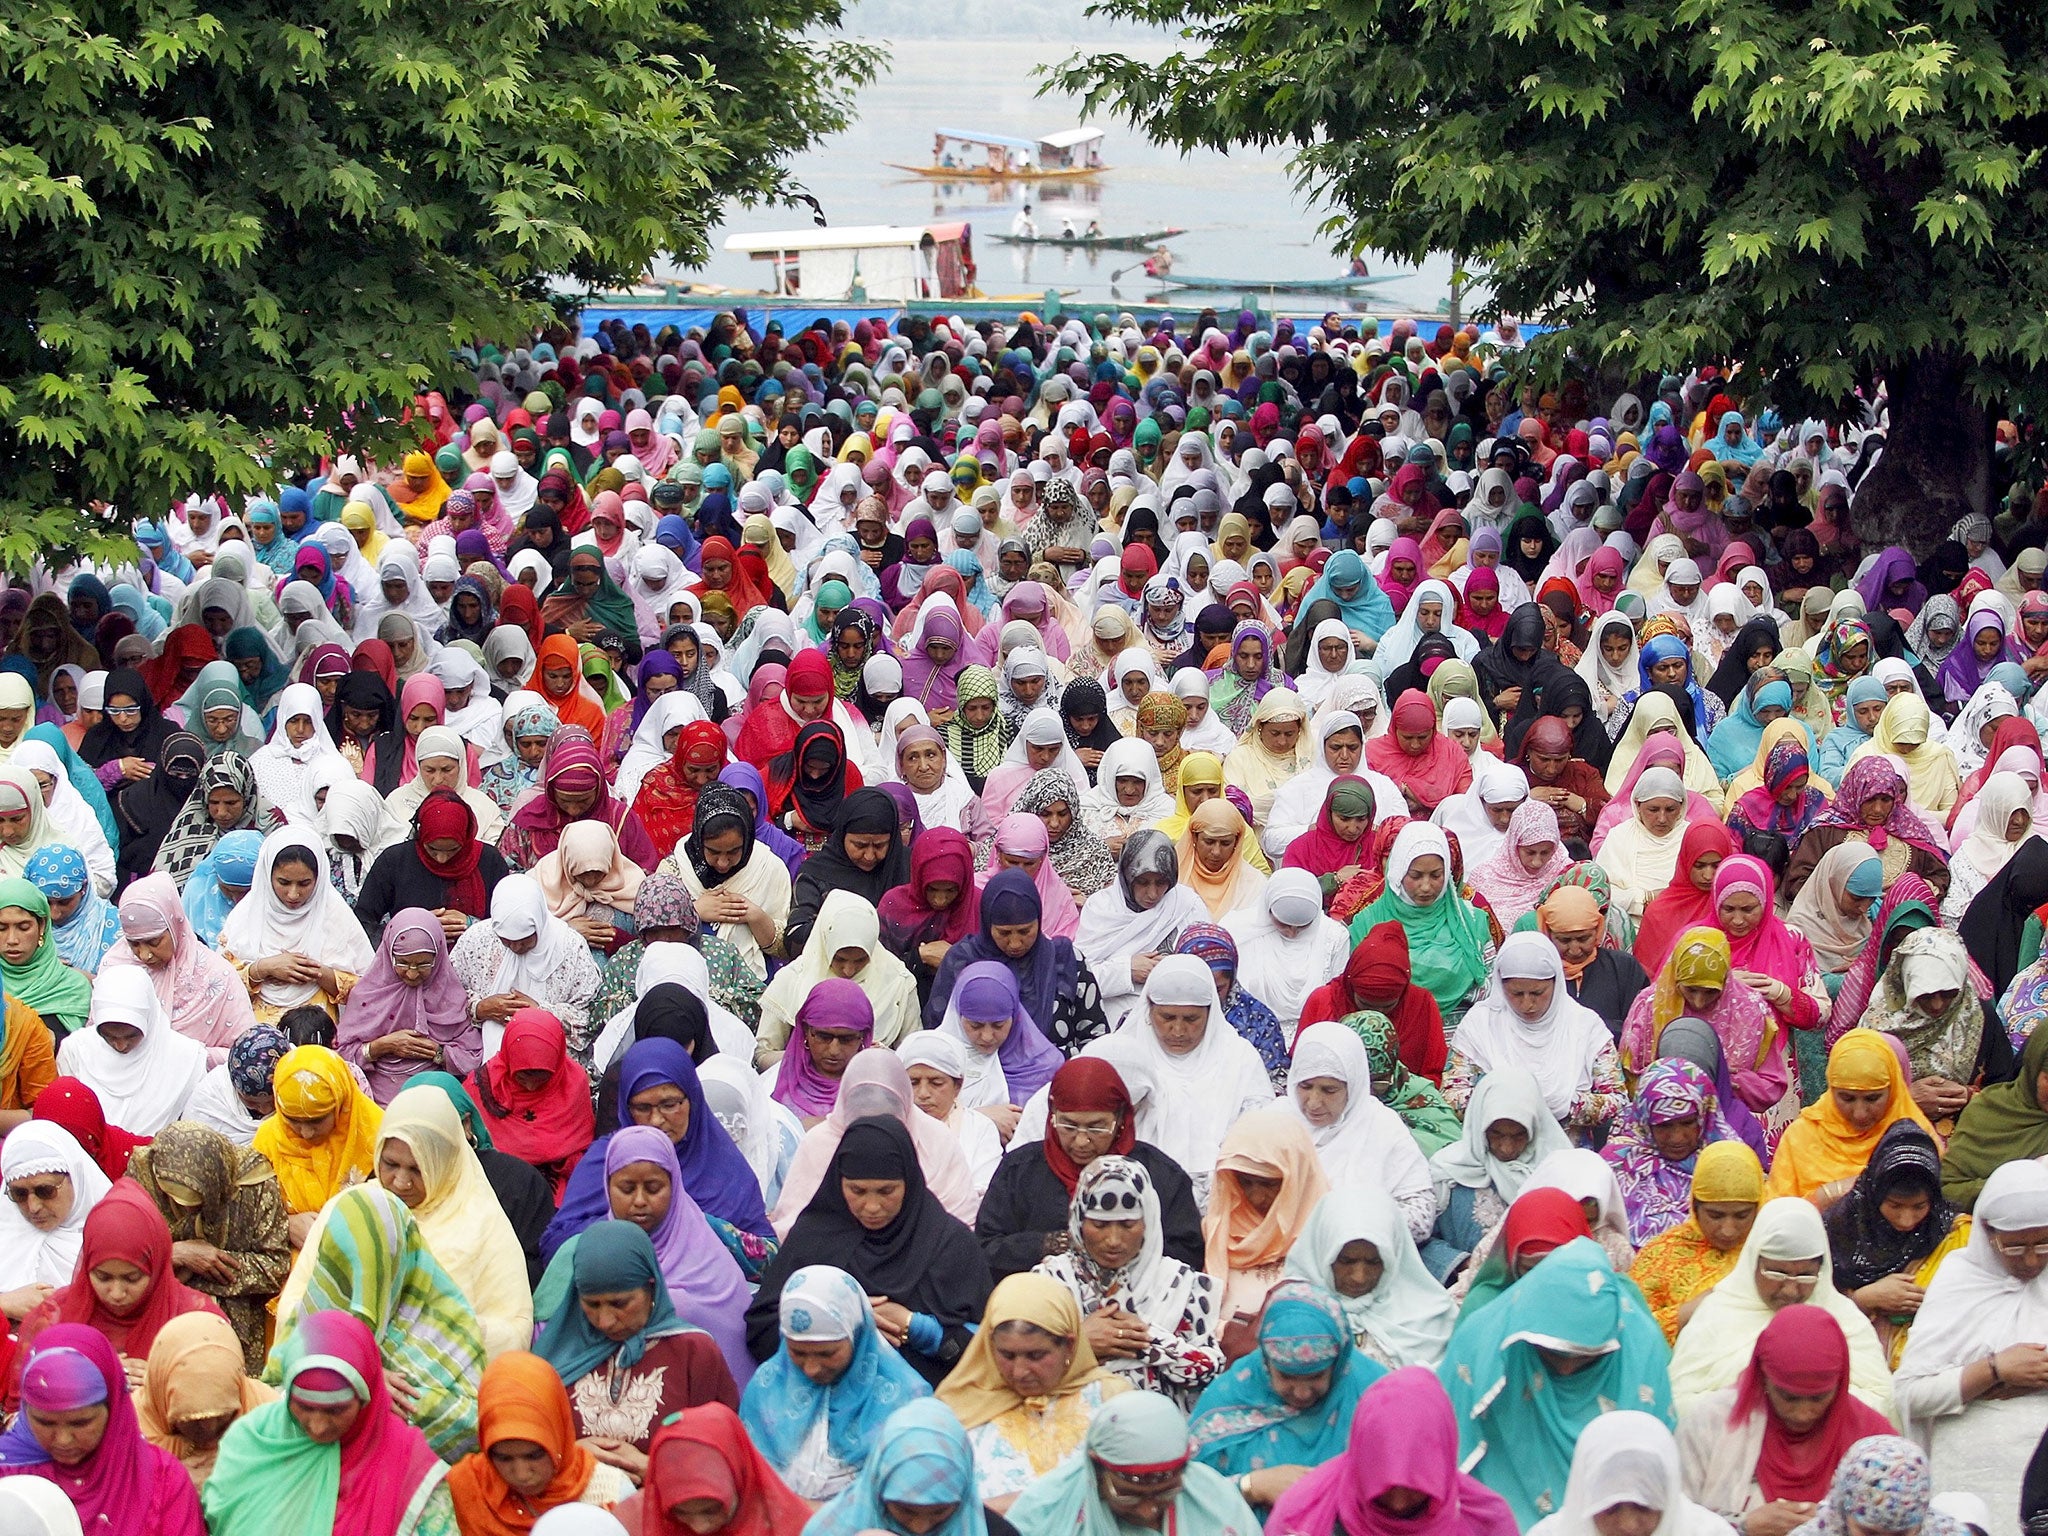 Kashmiri Muslim women pray together outdoors